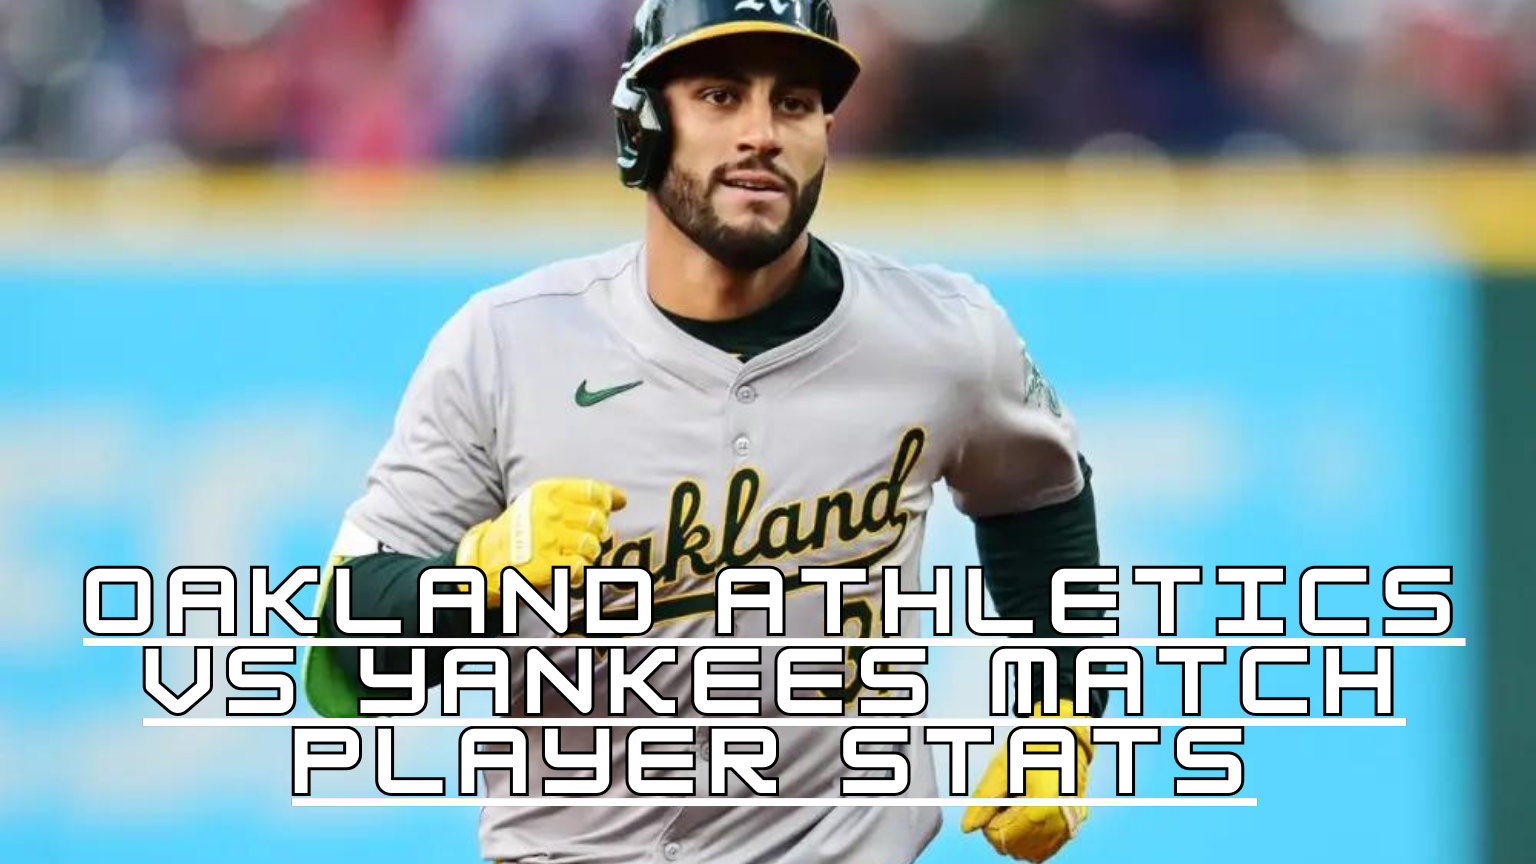 Oakland Athletics vs Yankees match player stats